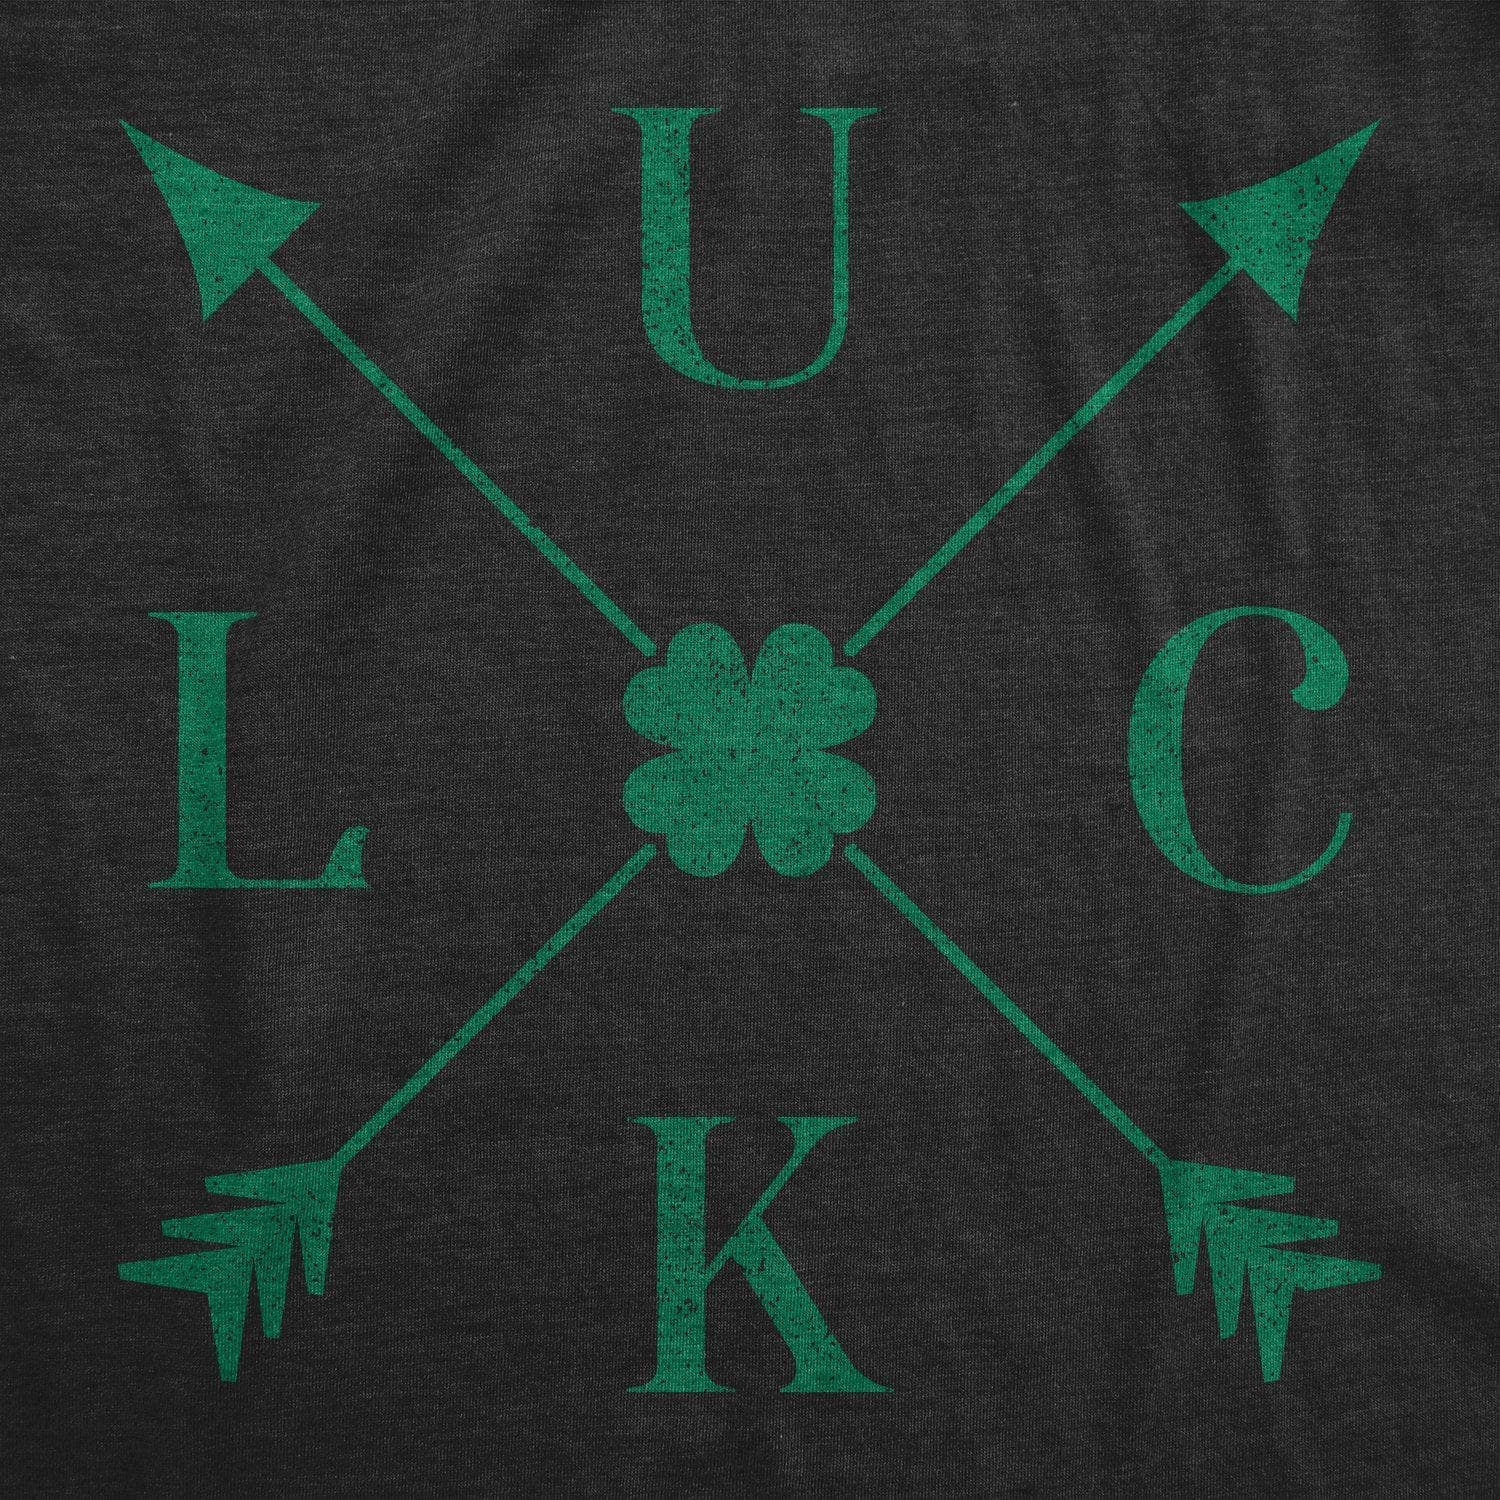 Luck Arrows Women's Tshirt  -  Crazy Dog T-Shirts